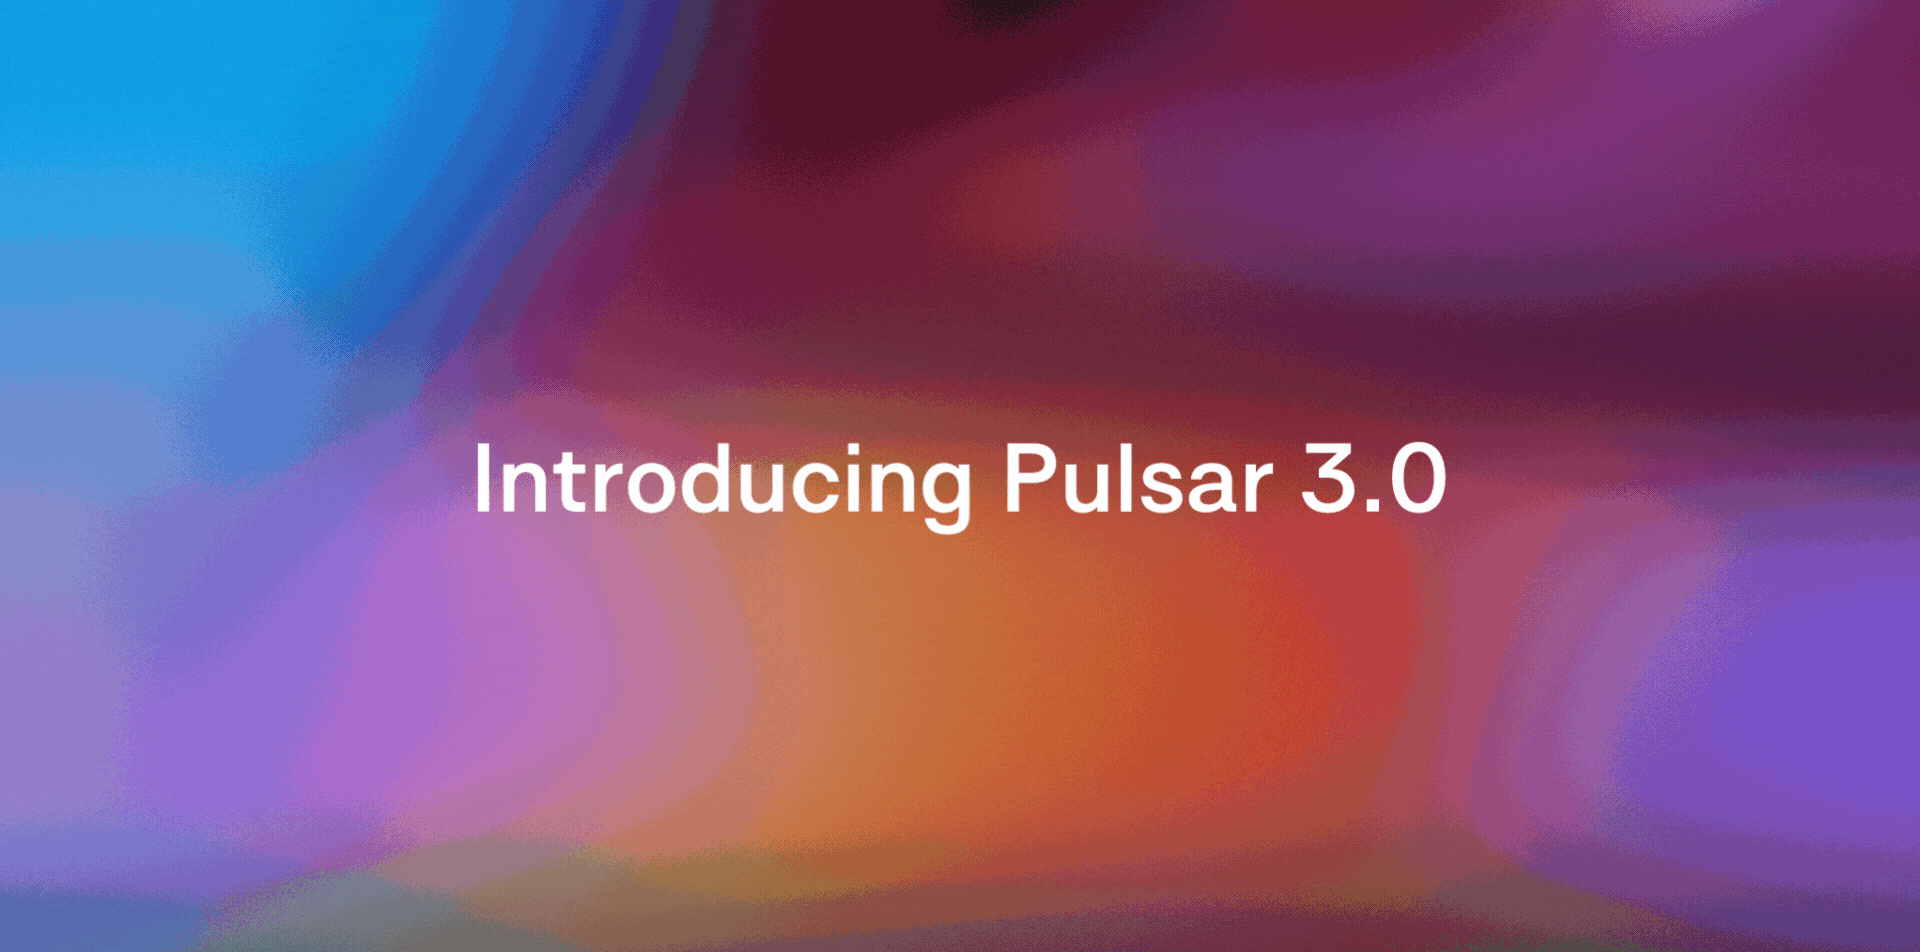 Pulsar 3.0 gif